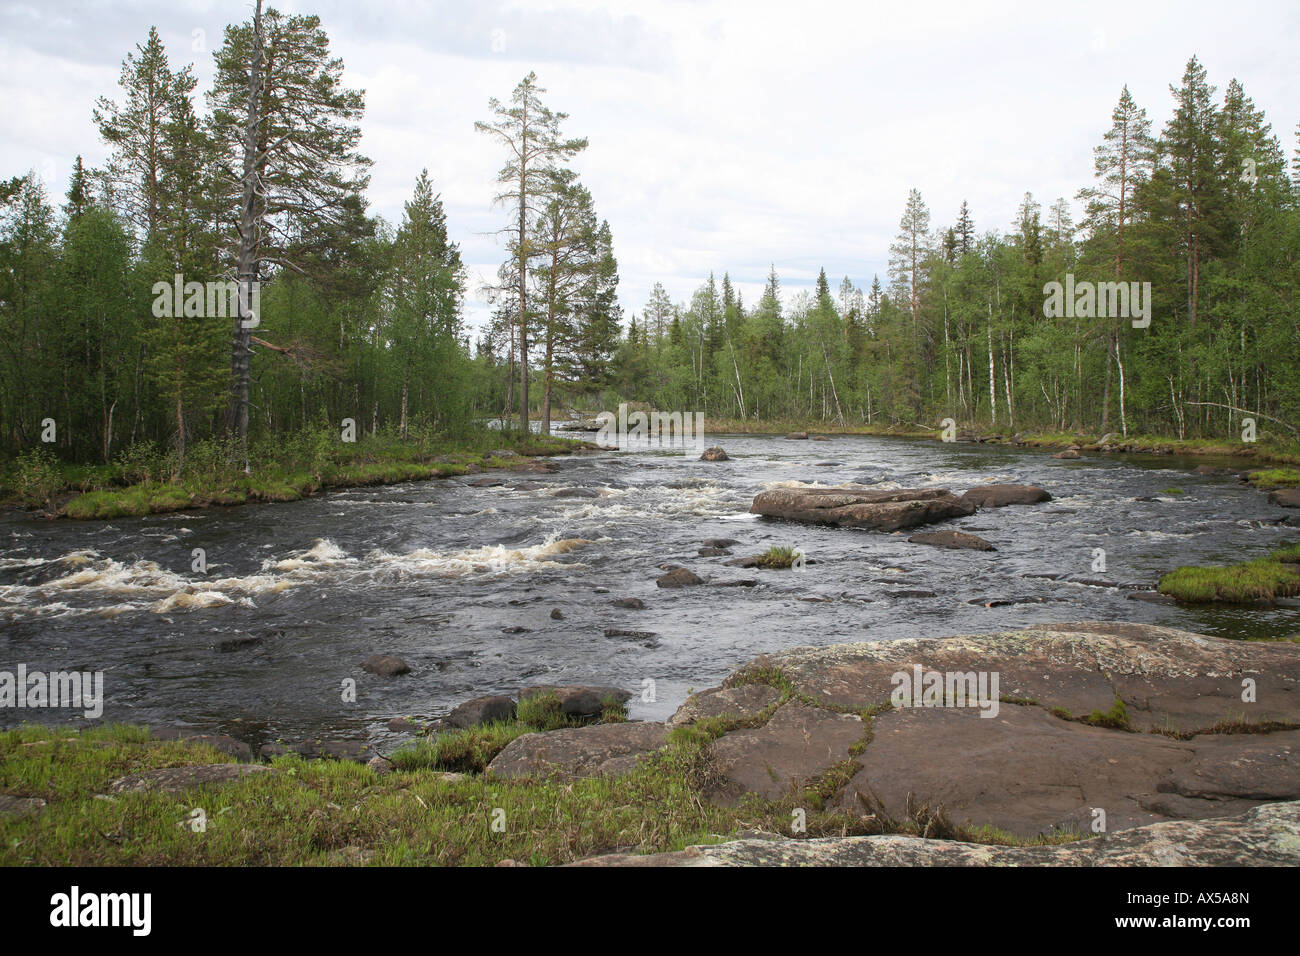 Mudusjakk River, Muddus National Park, Sweden Stock Photo